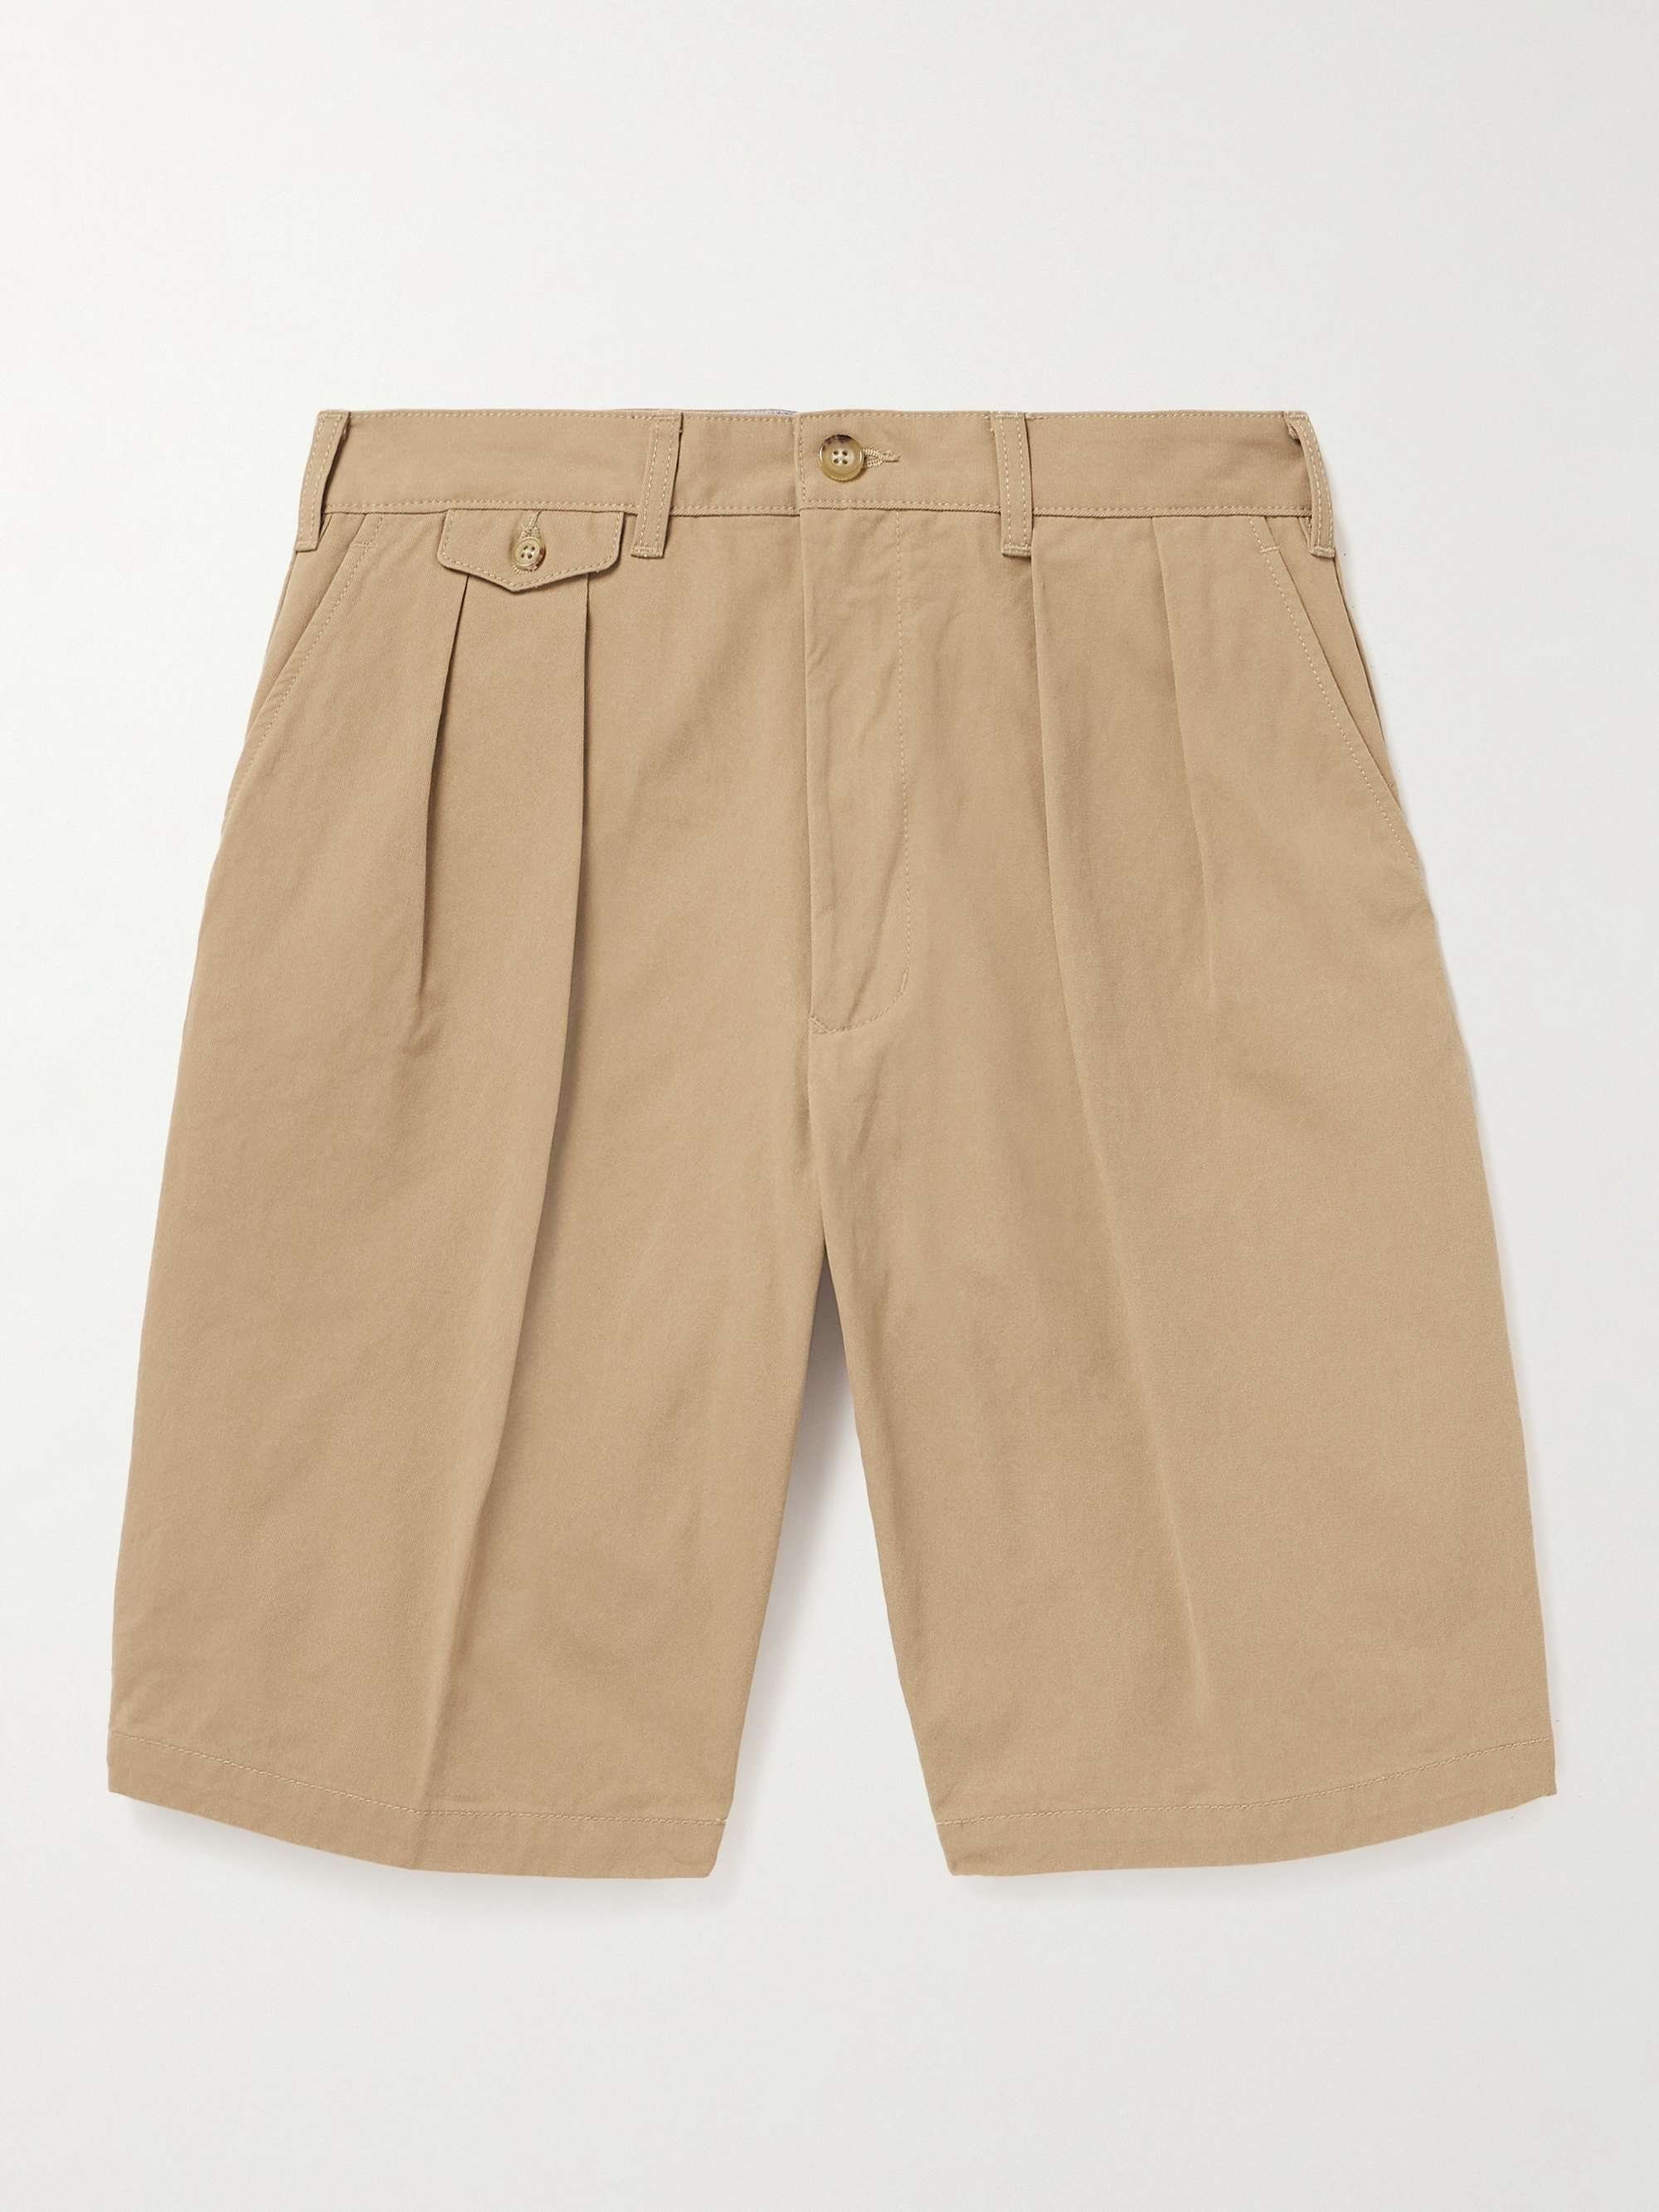 Men's Twill Shorts